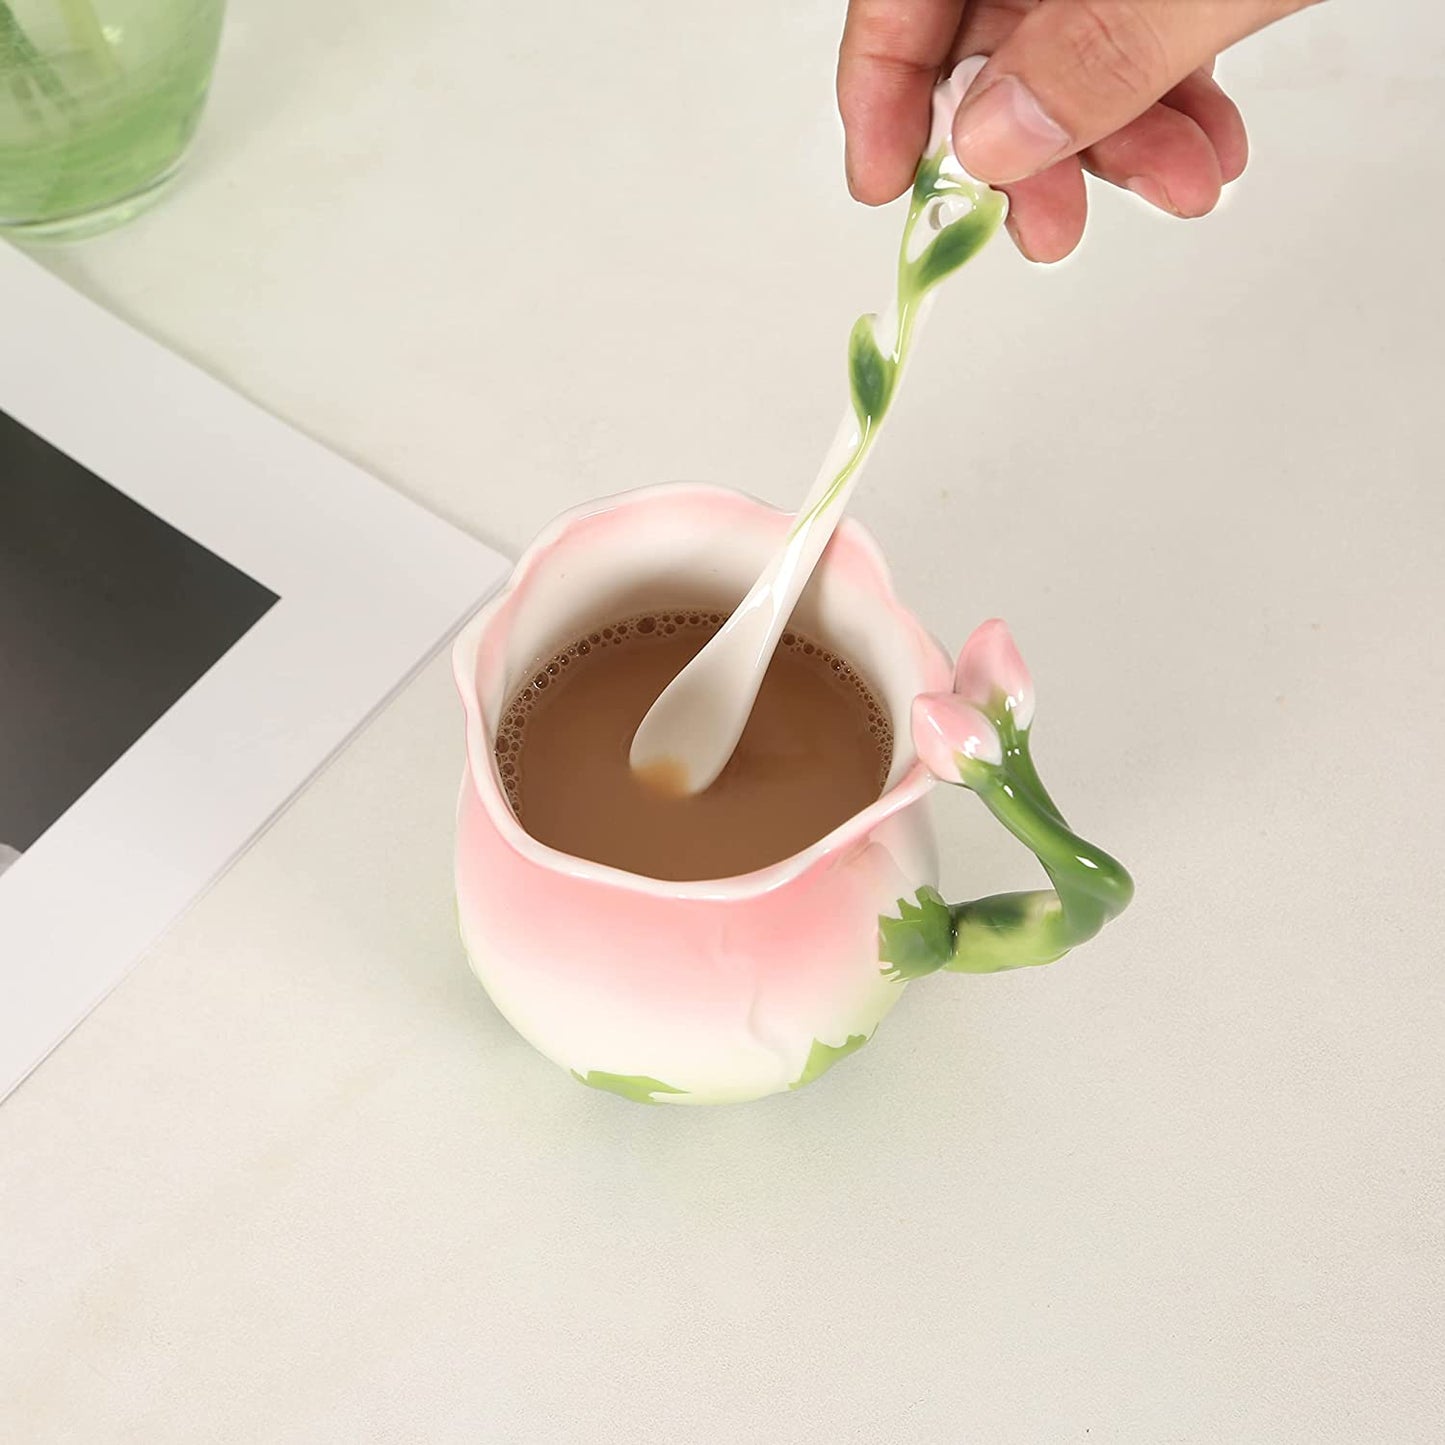 ENCOFT Ceramic Tea Cups Flower Tea Cup Set for Women with Spoon Rose Shape Design Mushroom Cup Gifts (Blue)